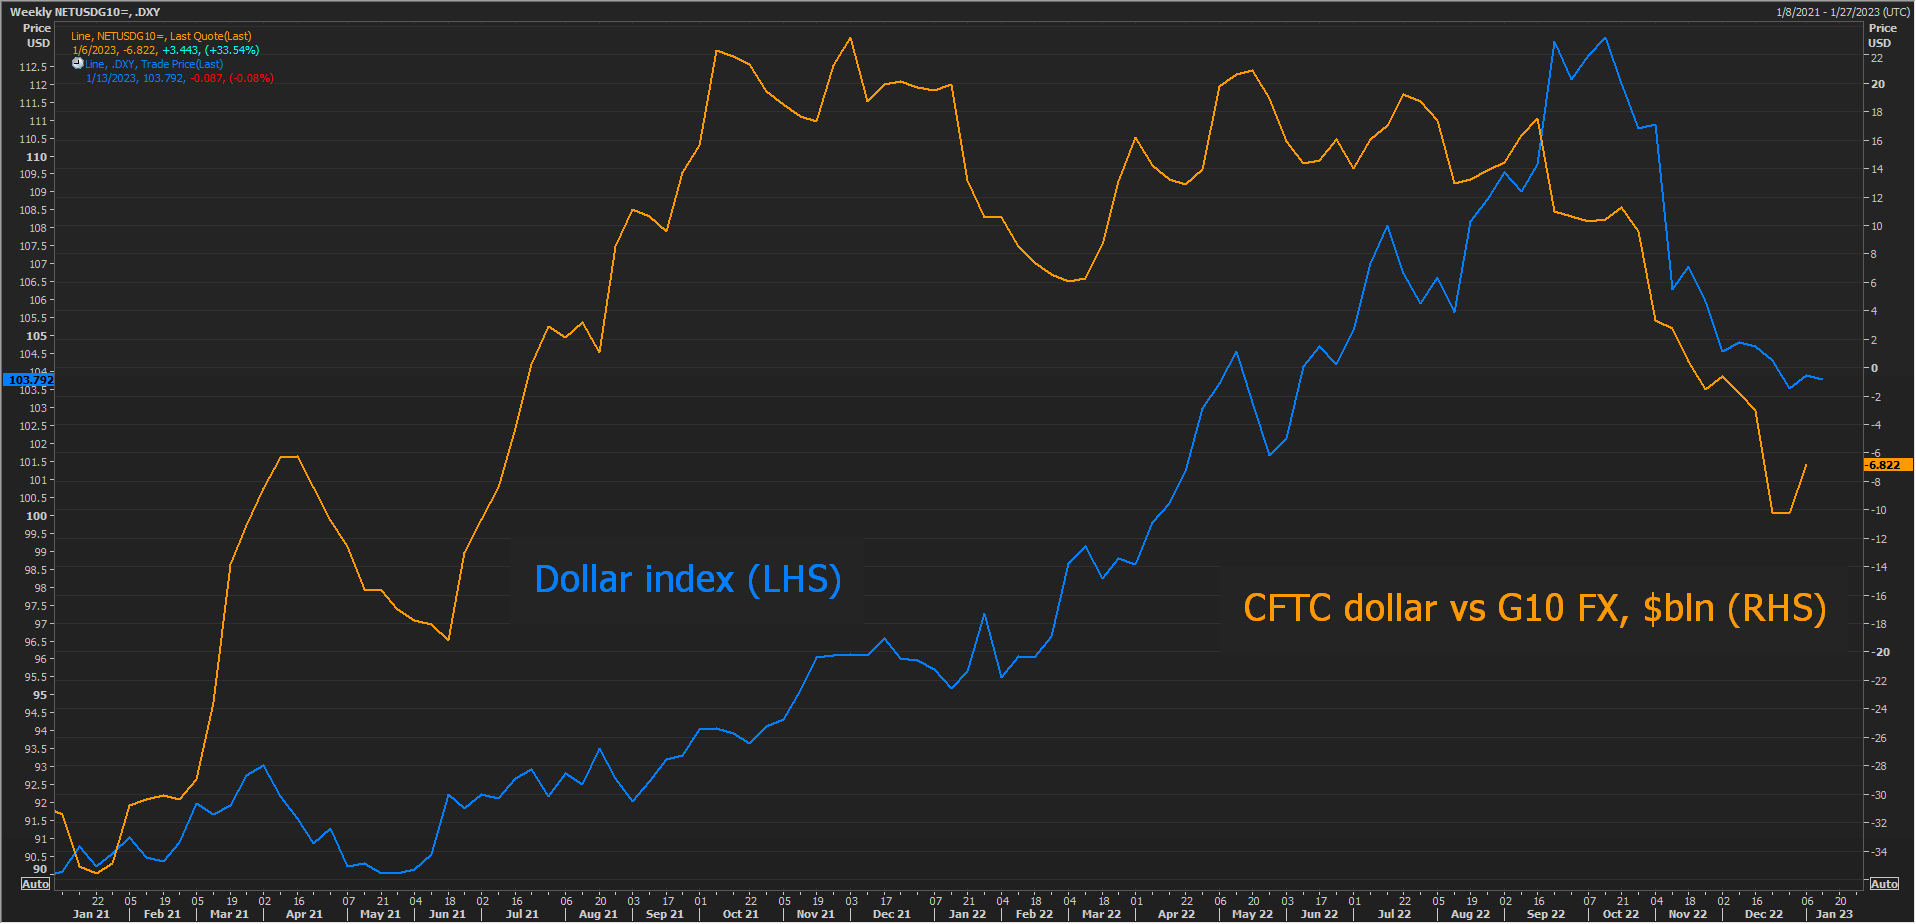 CFTC dollar position vs dollar index